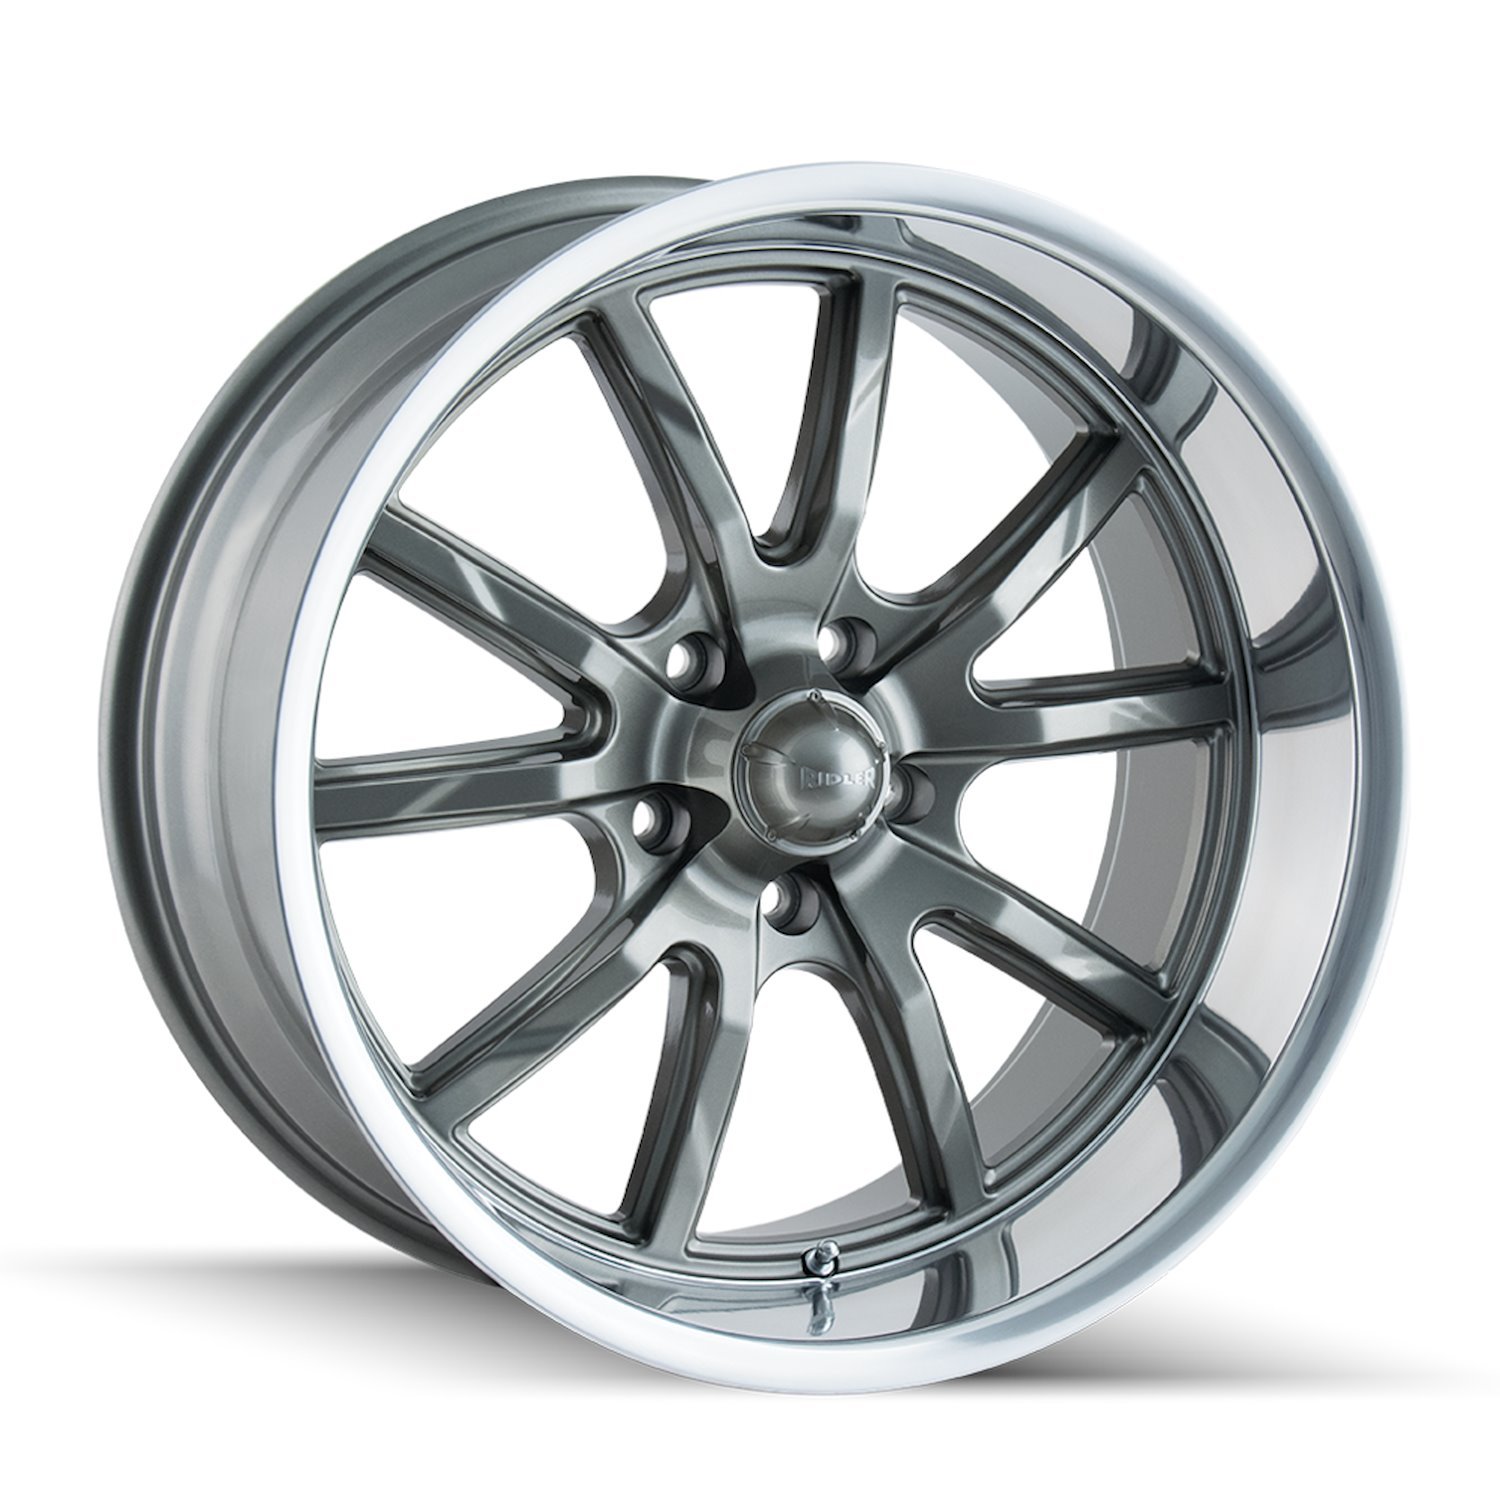 650-8865G 650-Series Wheel [Size: 18" x 8"] Gloss Grey Polished Finish